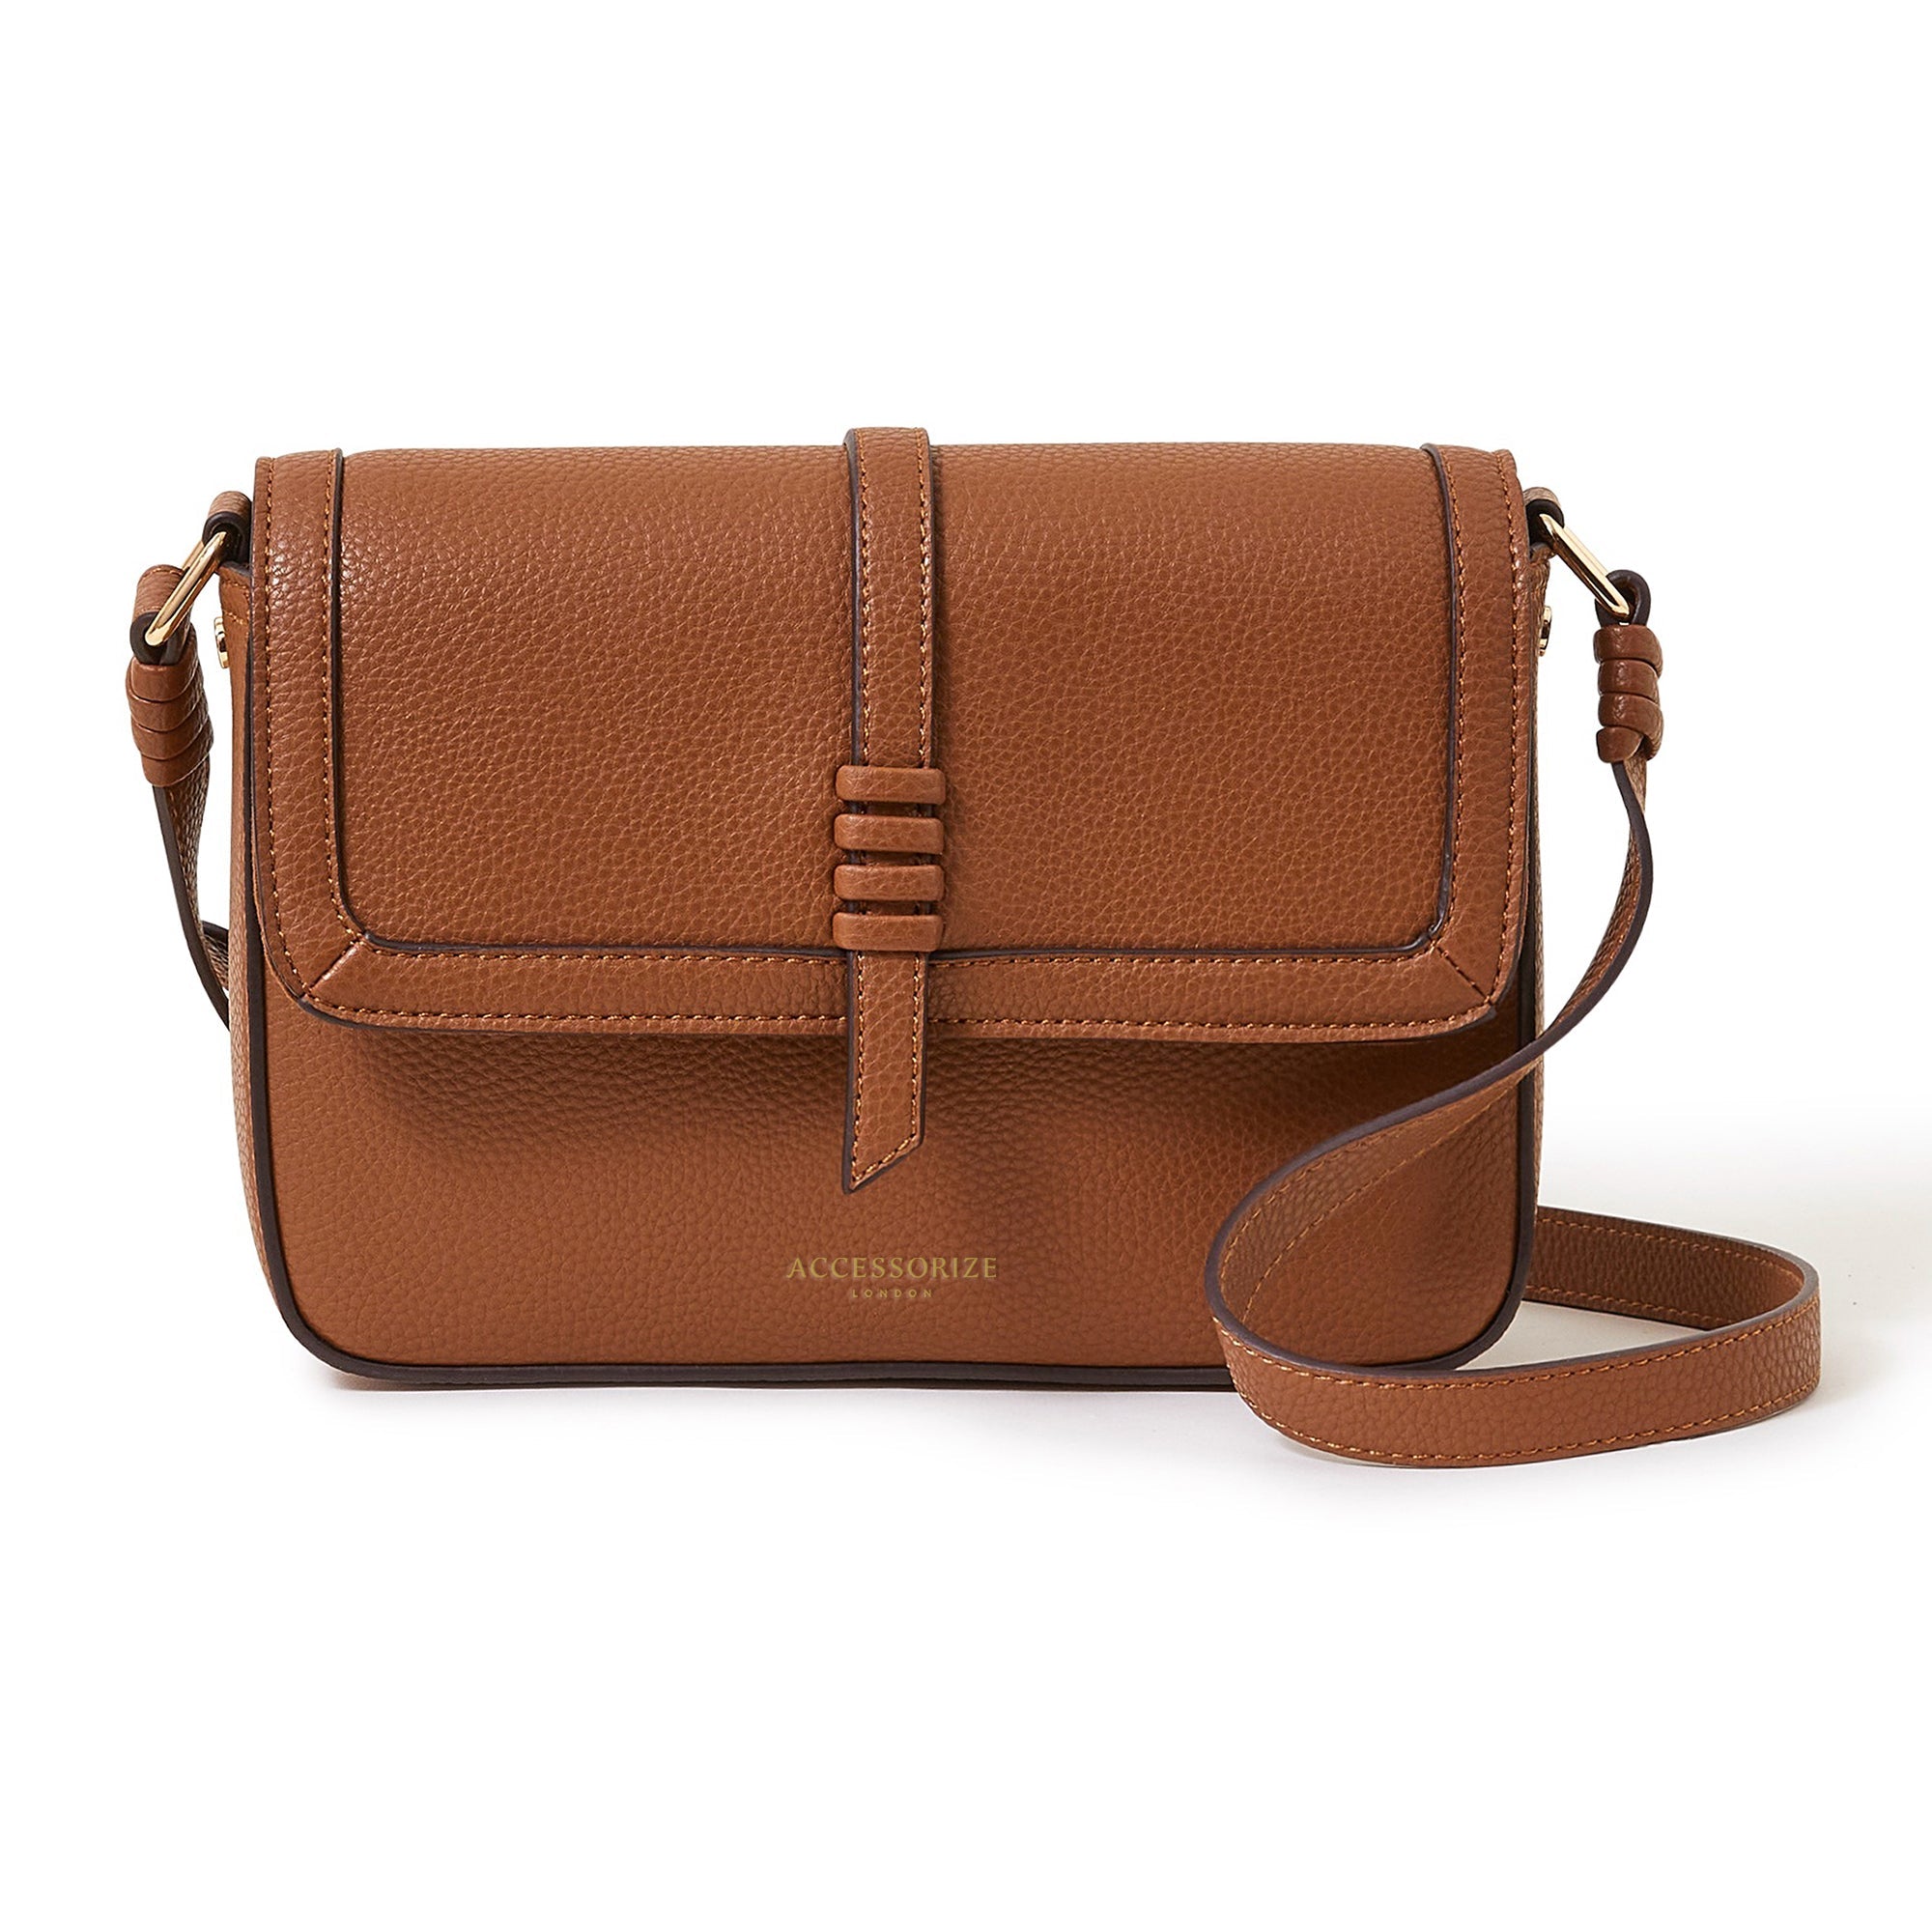 Accessorize London Women's Faux Leather Brown Artisan Sling Bag